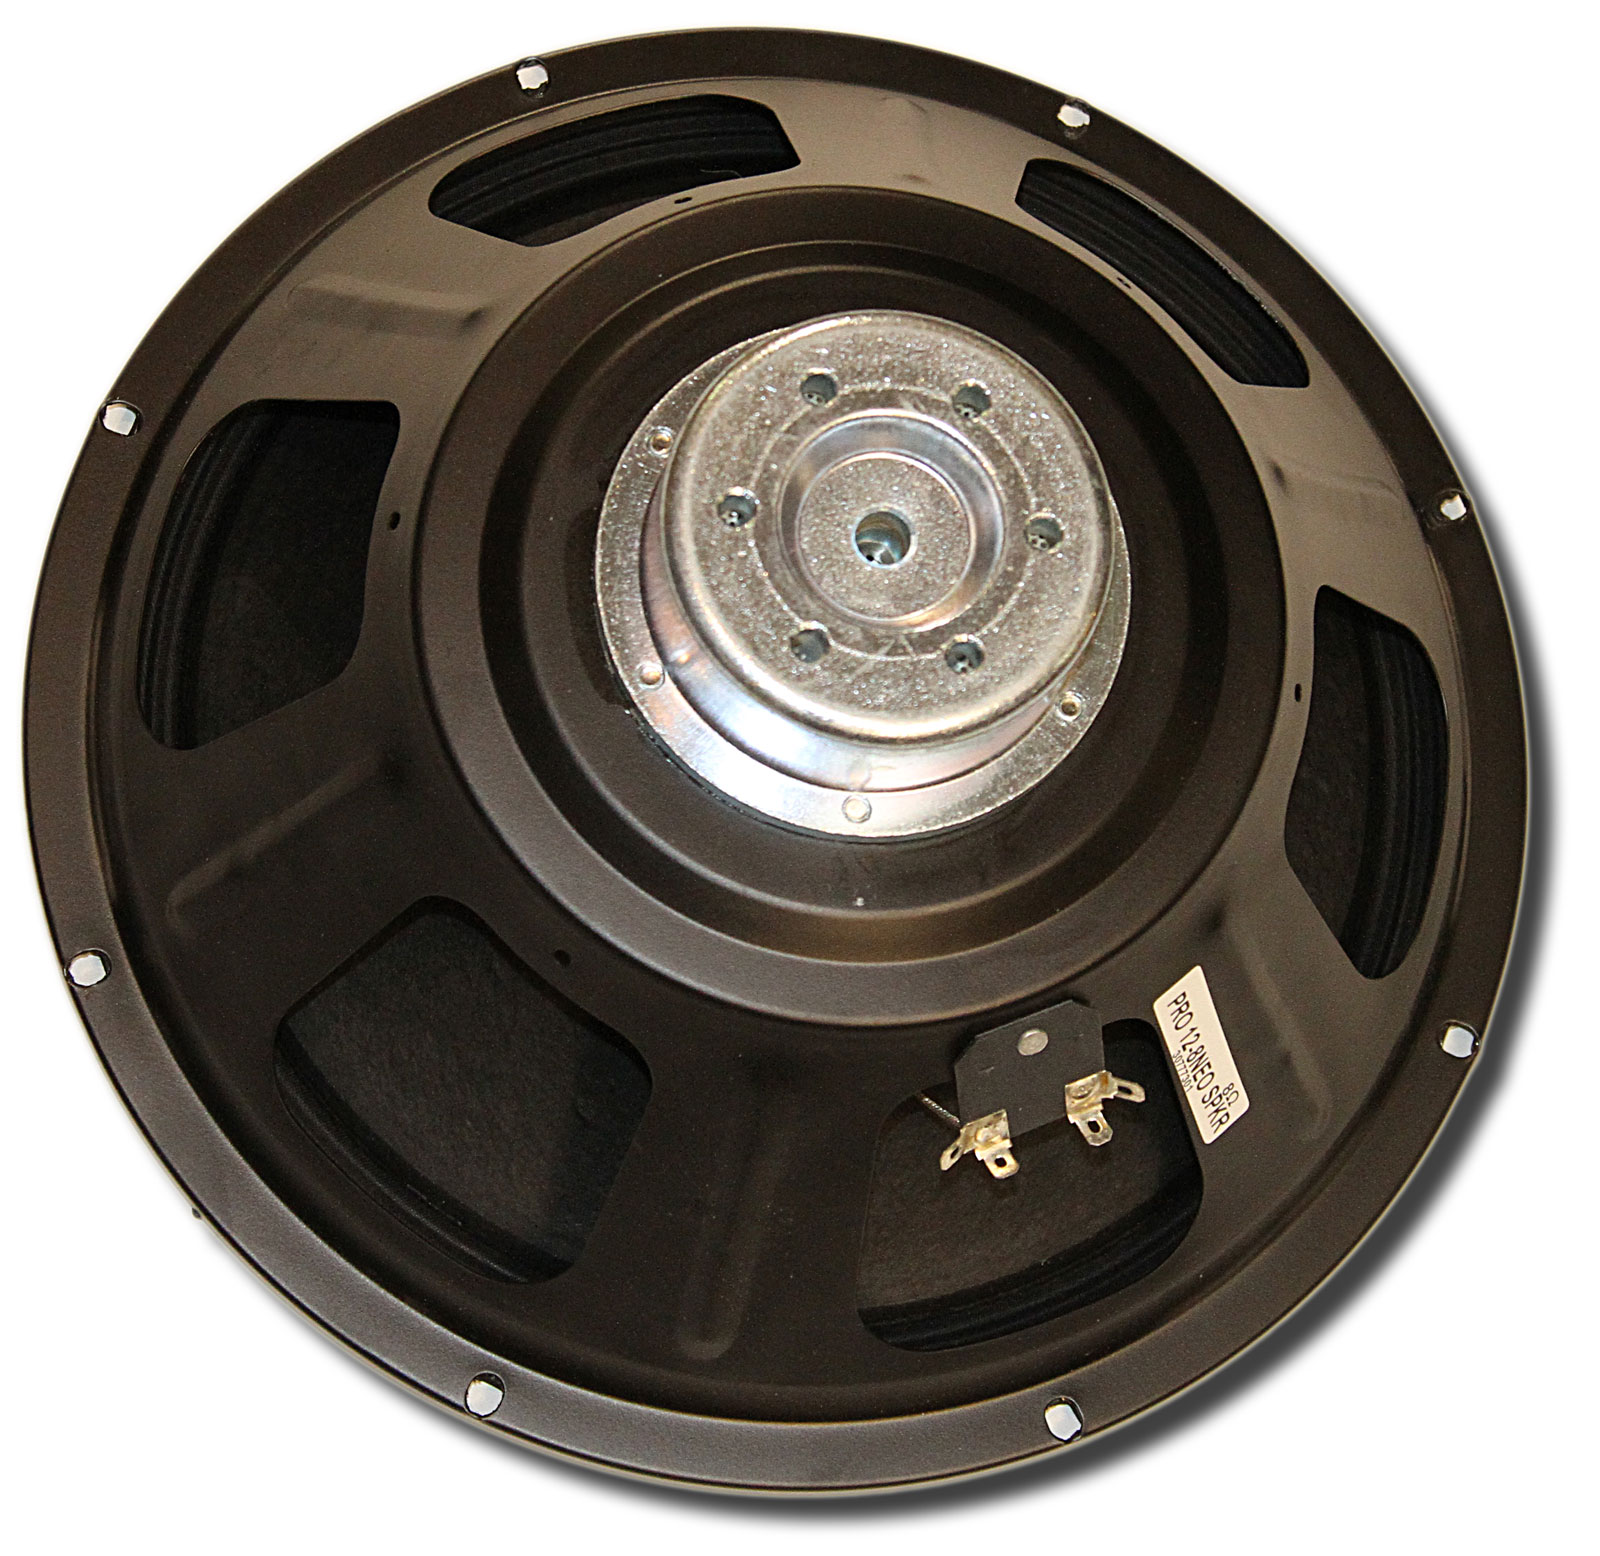 Peavey speaker components